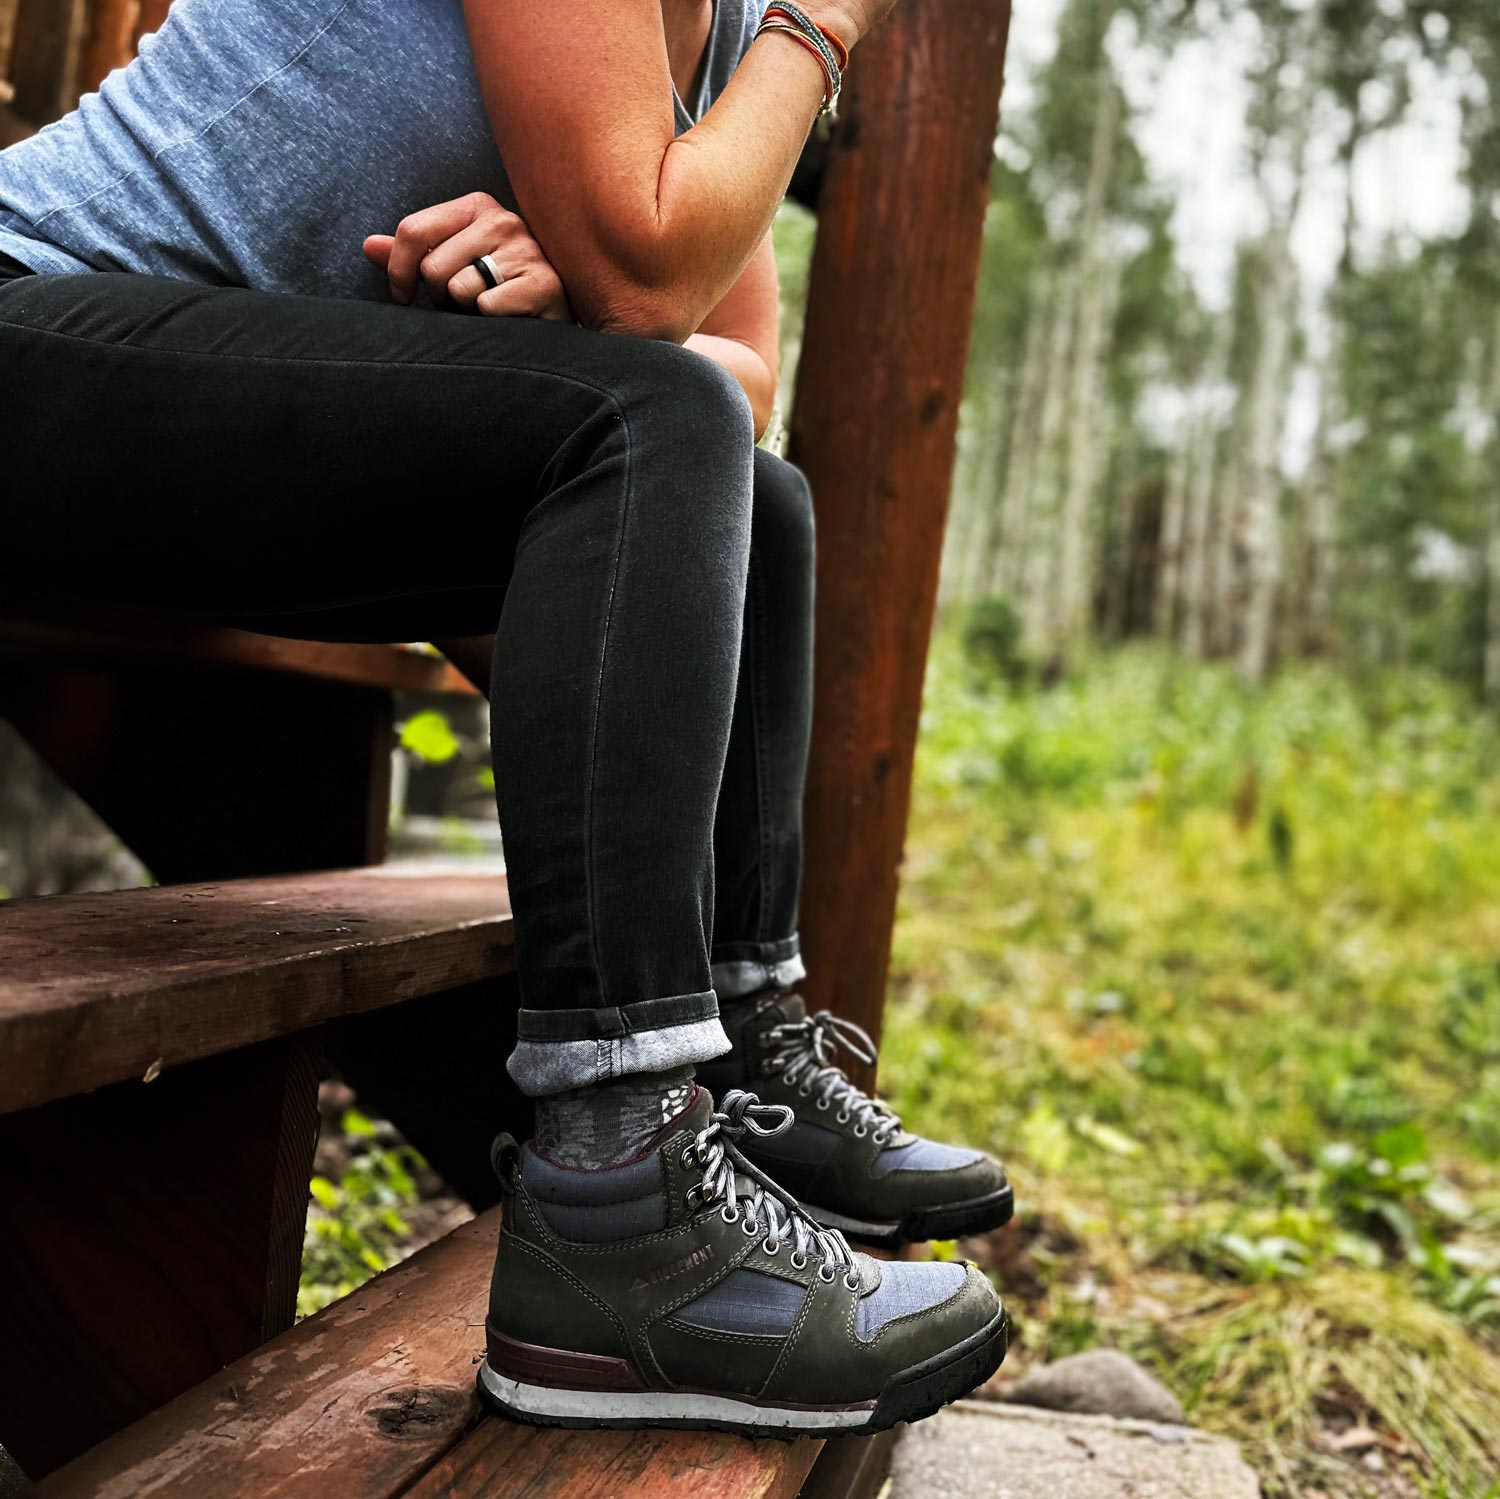 Ridgemont Monty Hi Women's Waterproof Hiking Boots - Waxed Leather